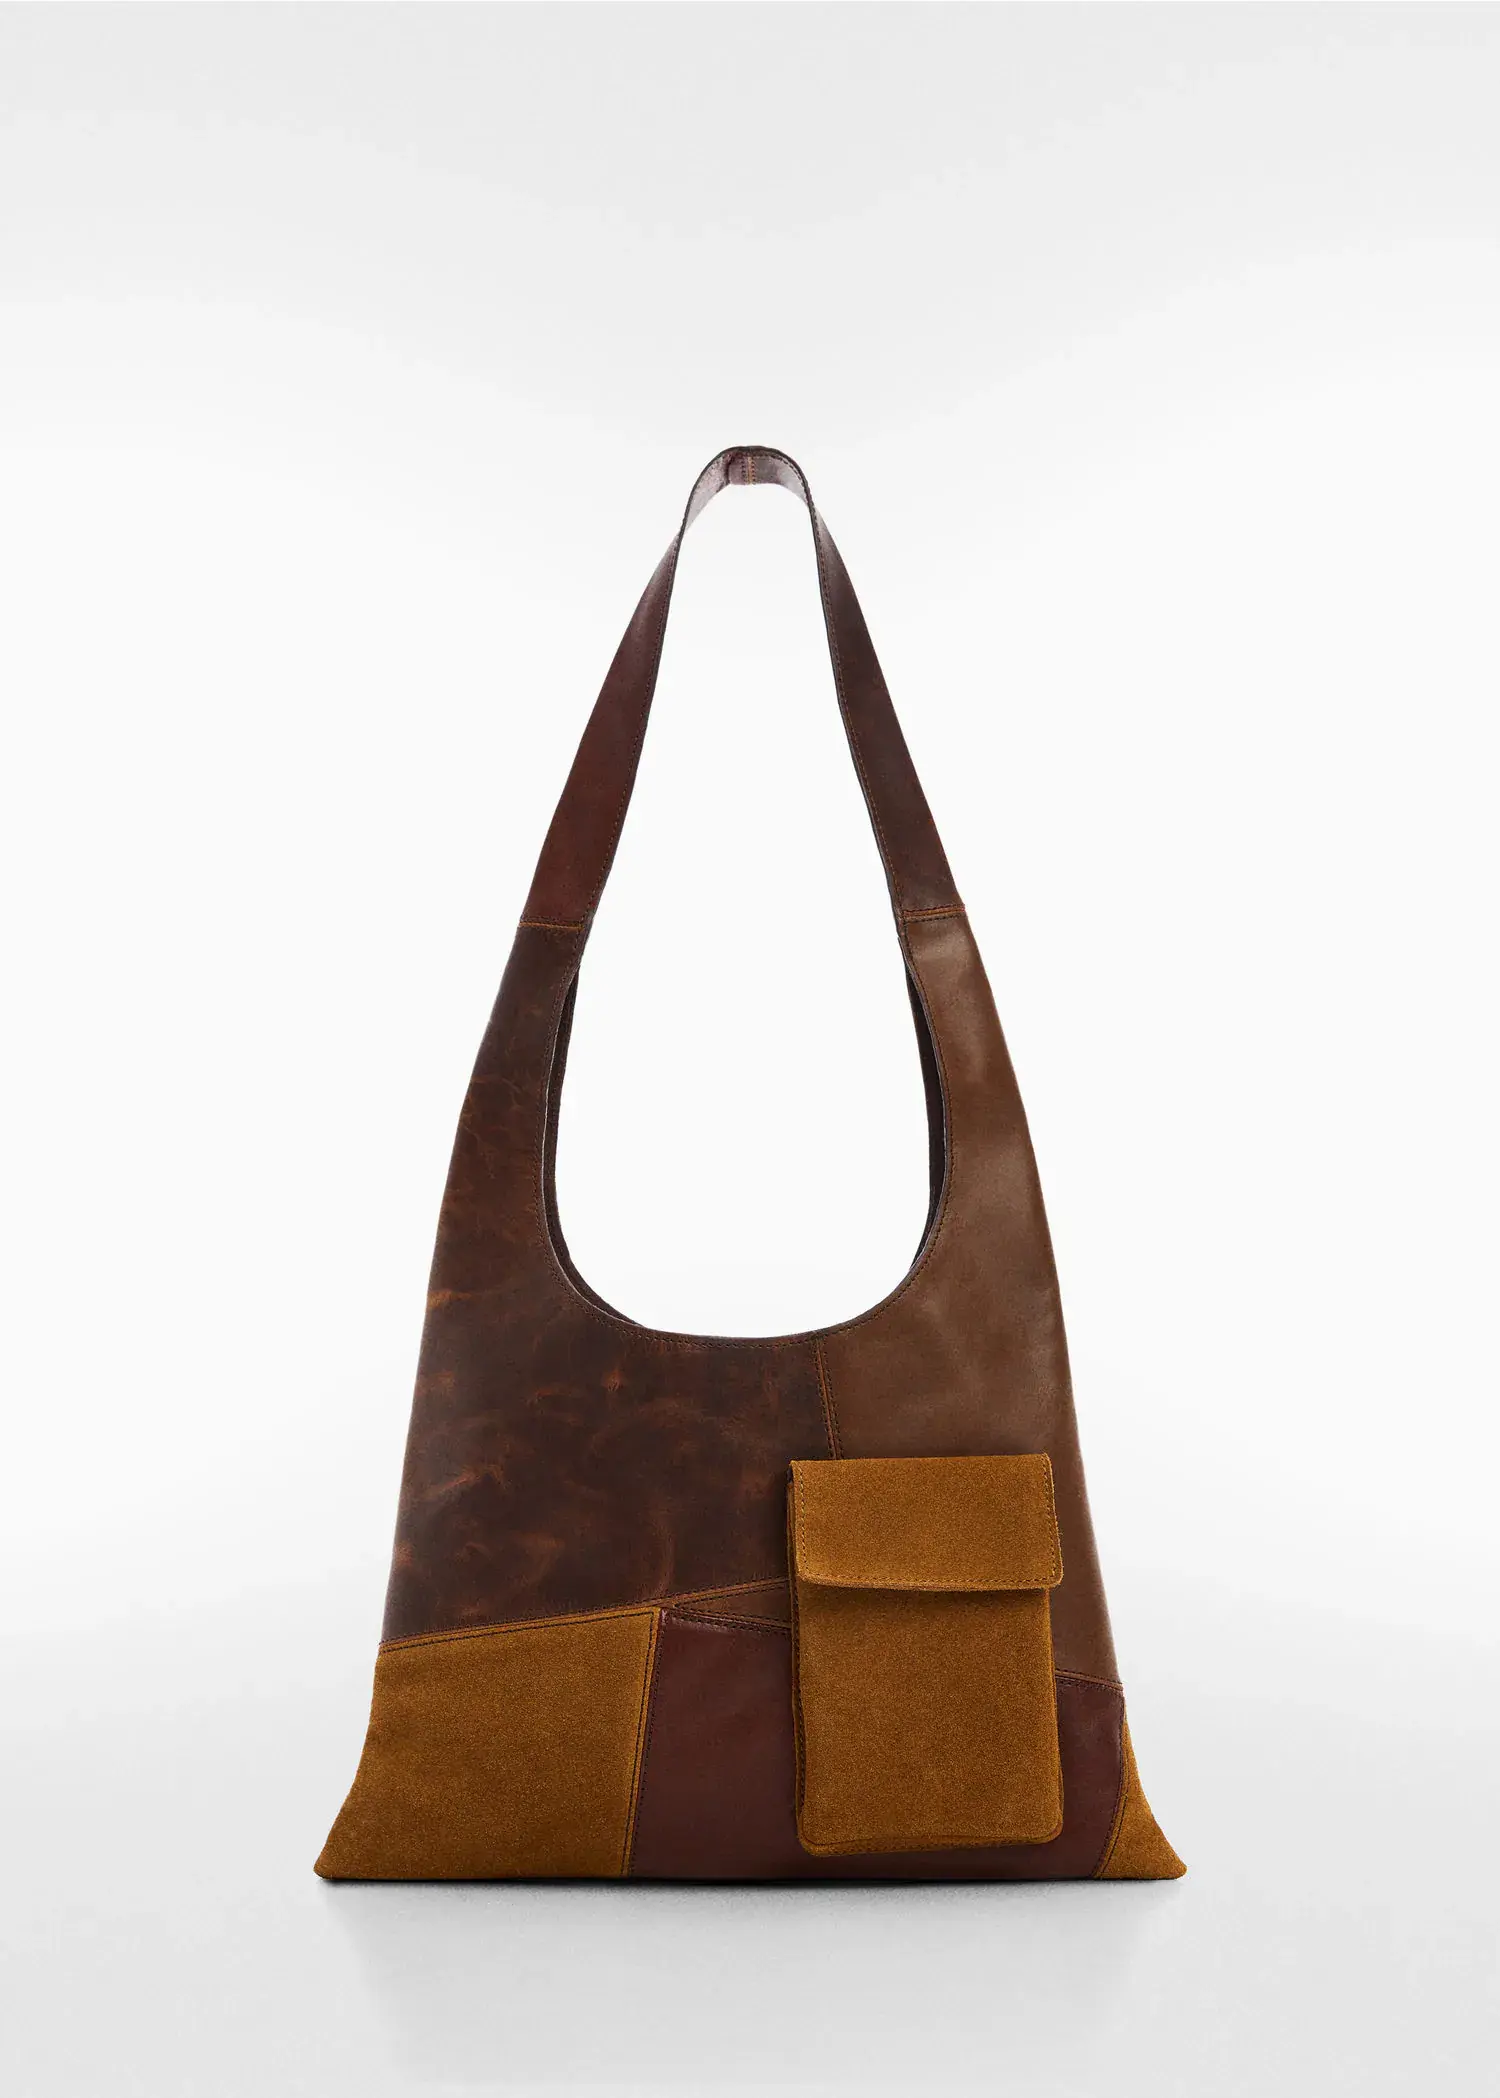 Mango Patchwork leather bag. 2